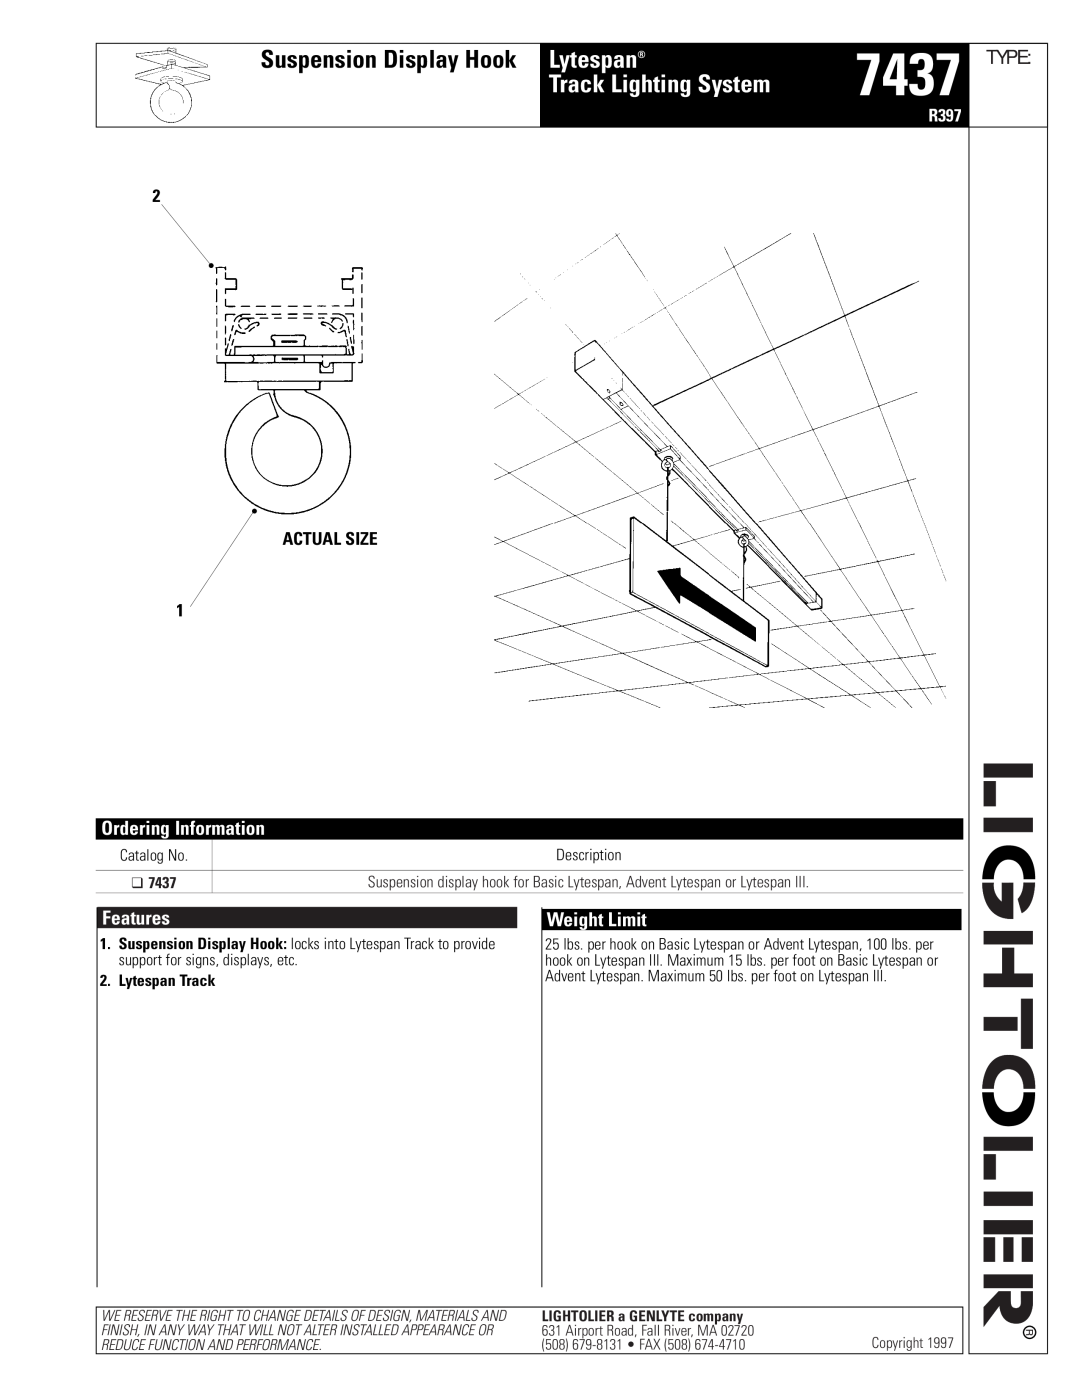 Lightolier 7437 manual Lytespan, Track Lighting System, Suspension Display Hook, 7650, Ordering Information, Features 